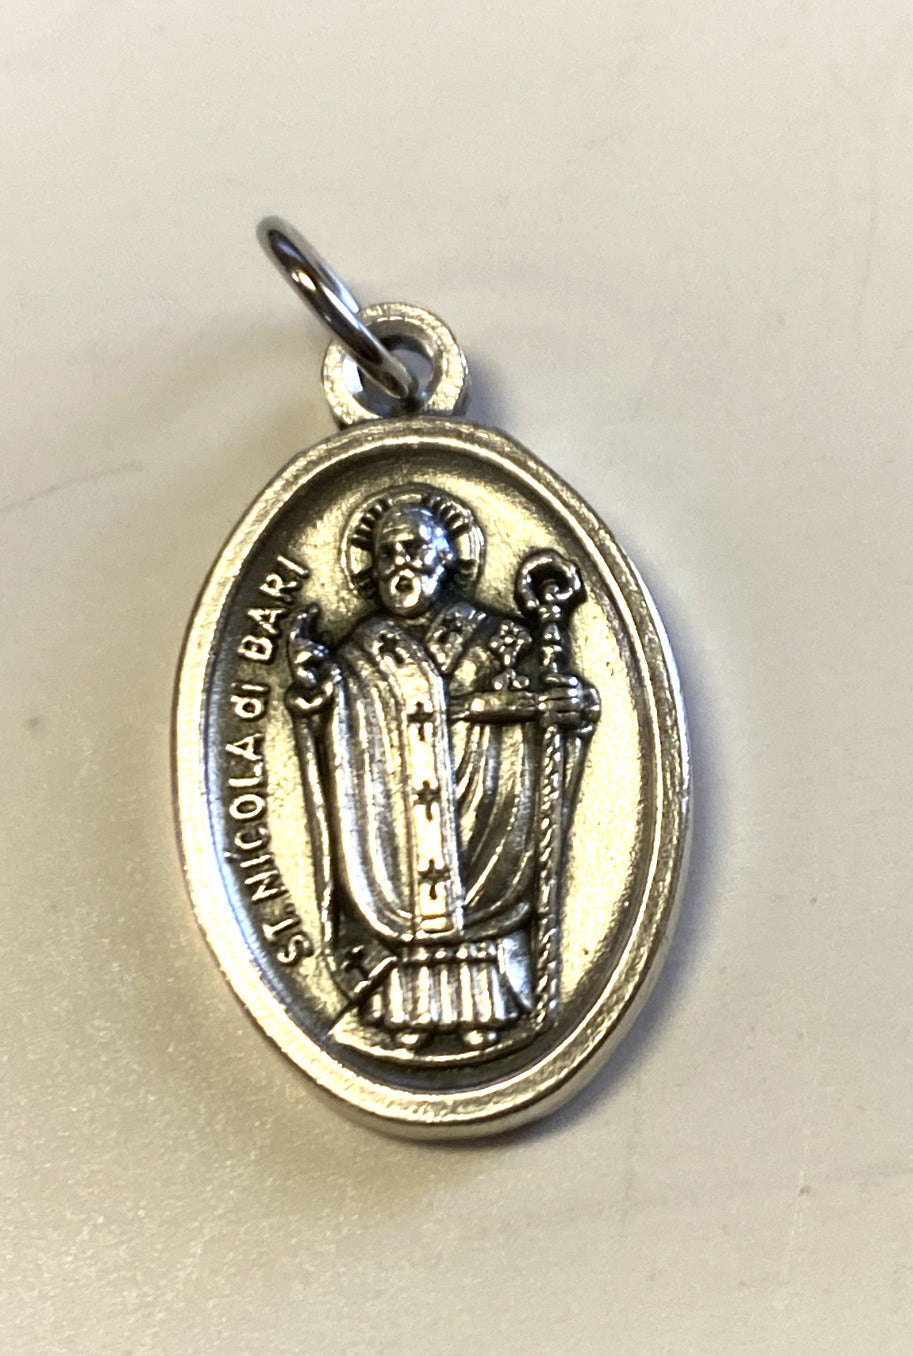 Saint Nicholas  Prayer folder + Medal, New - Bob and Penny Lord